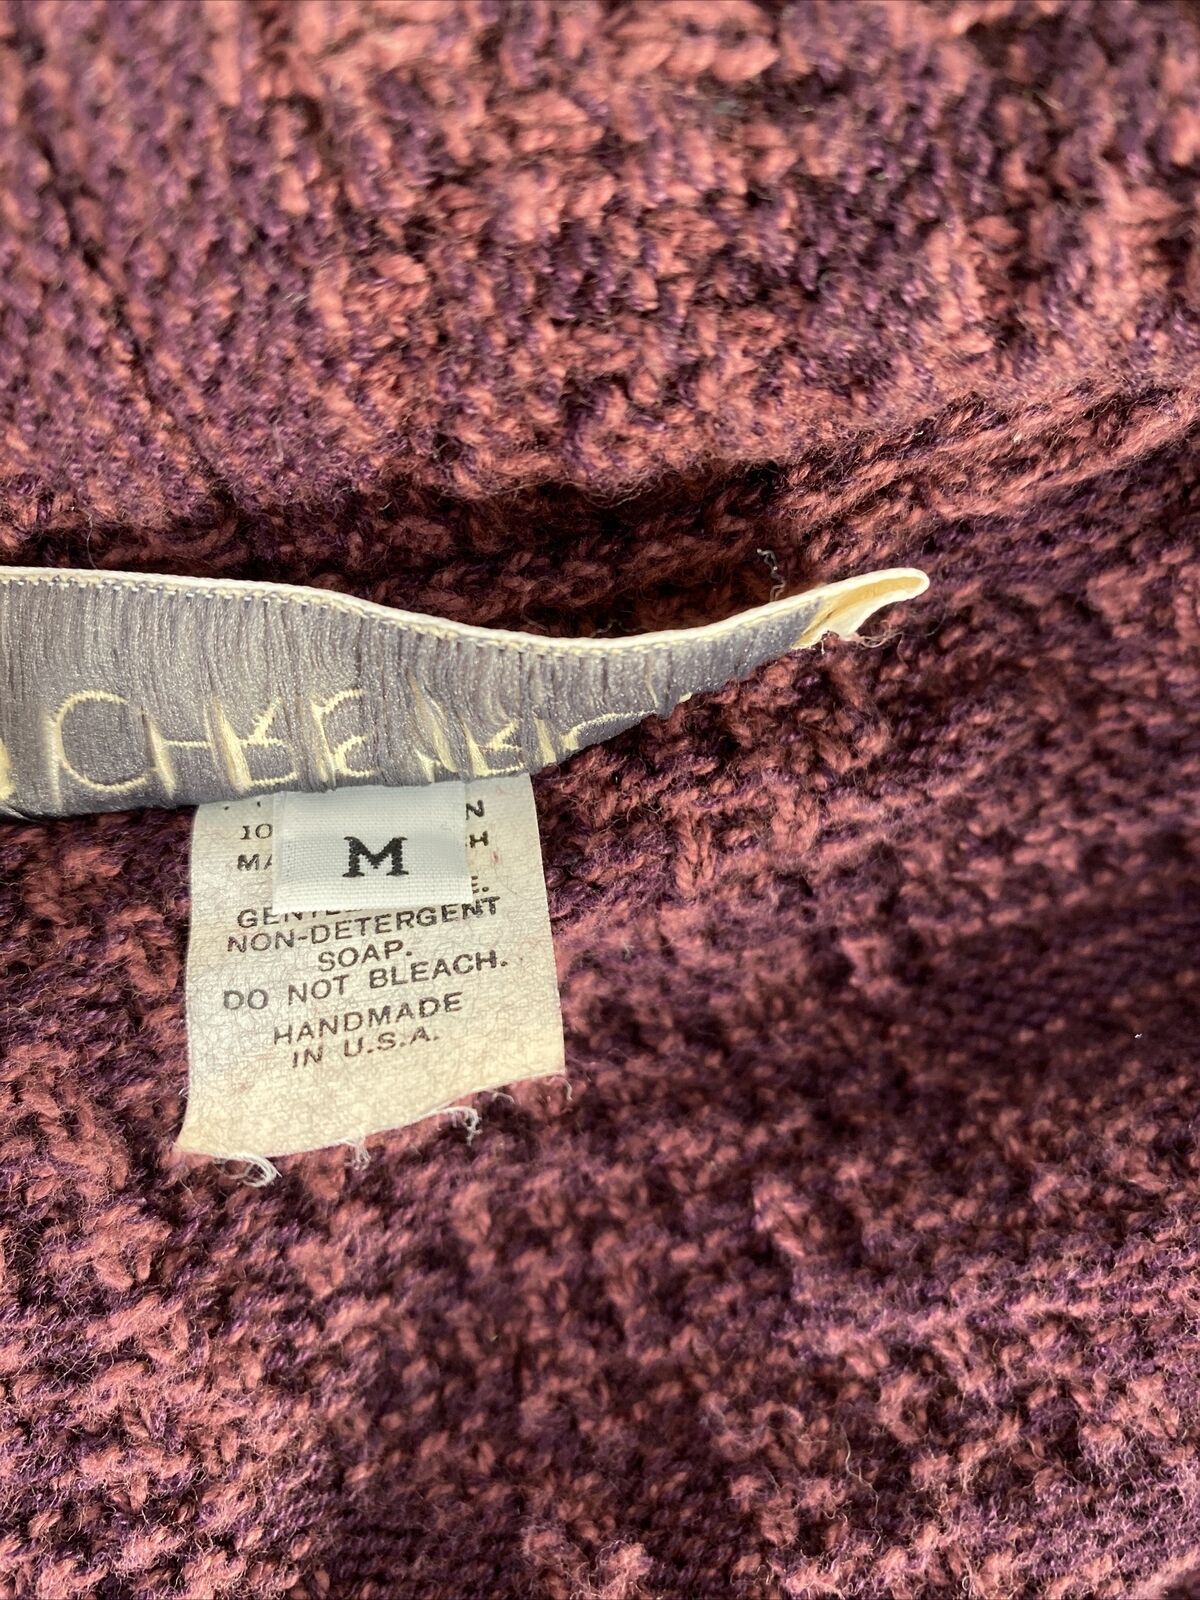 Chris Triola Women's Purple Cotton Open Cardigan Sweater - M